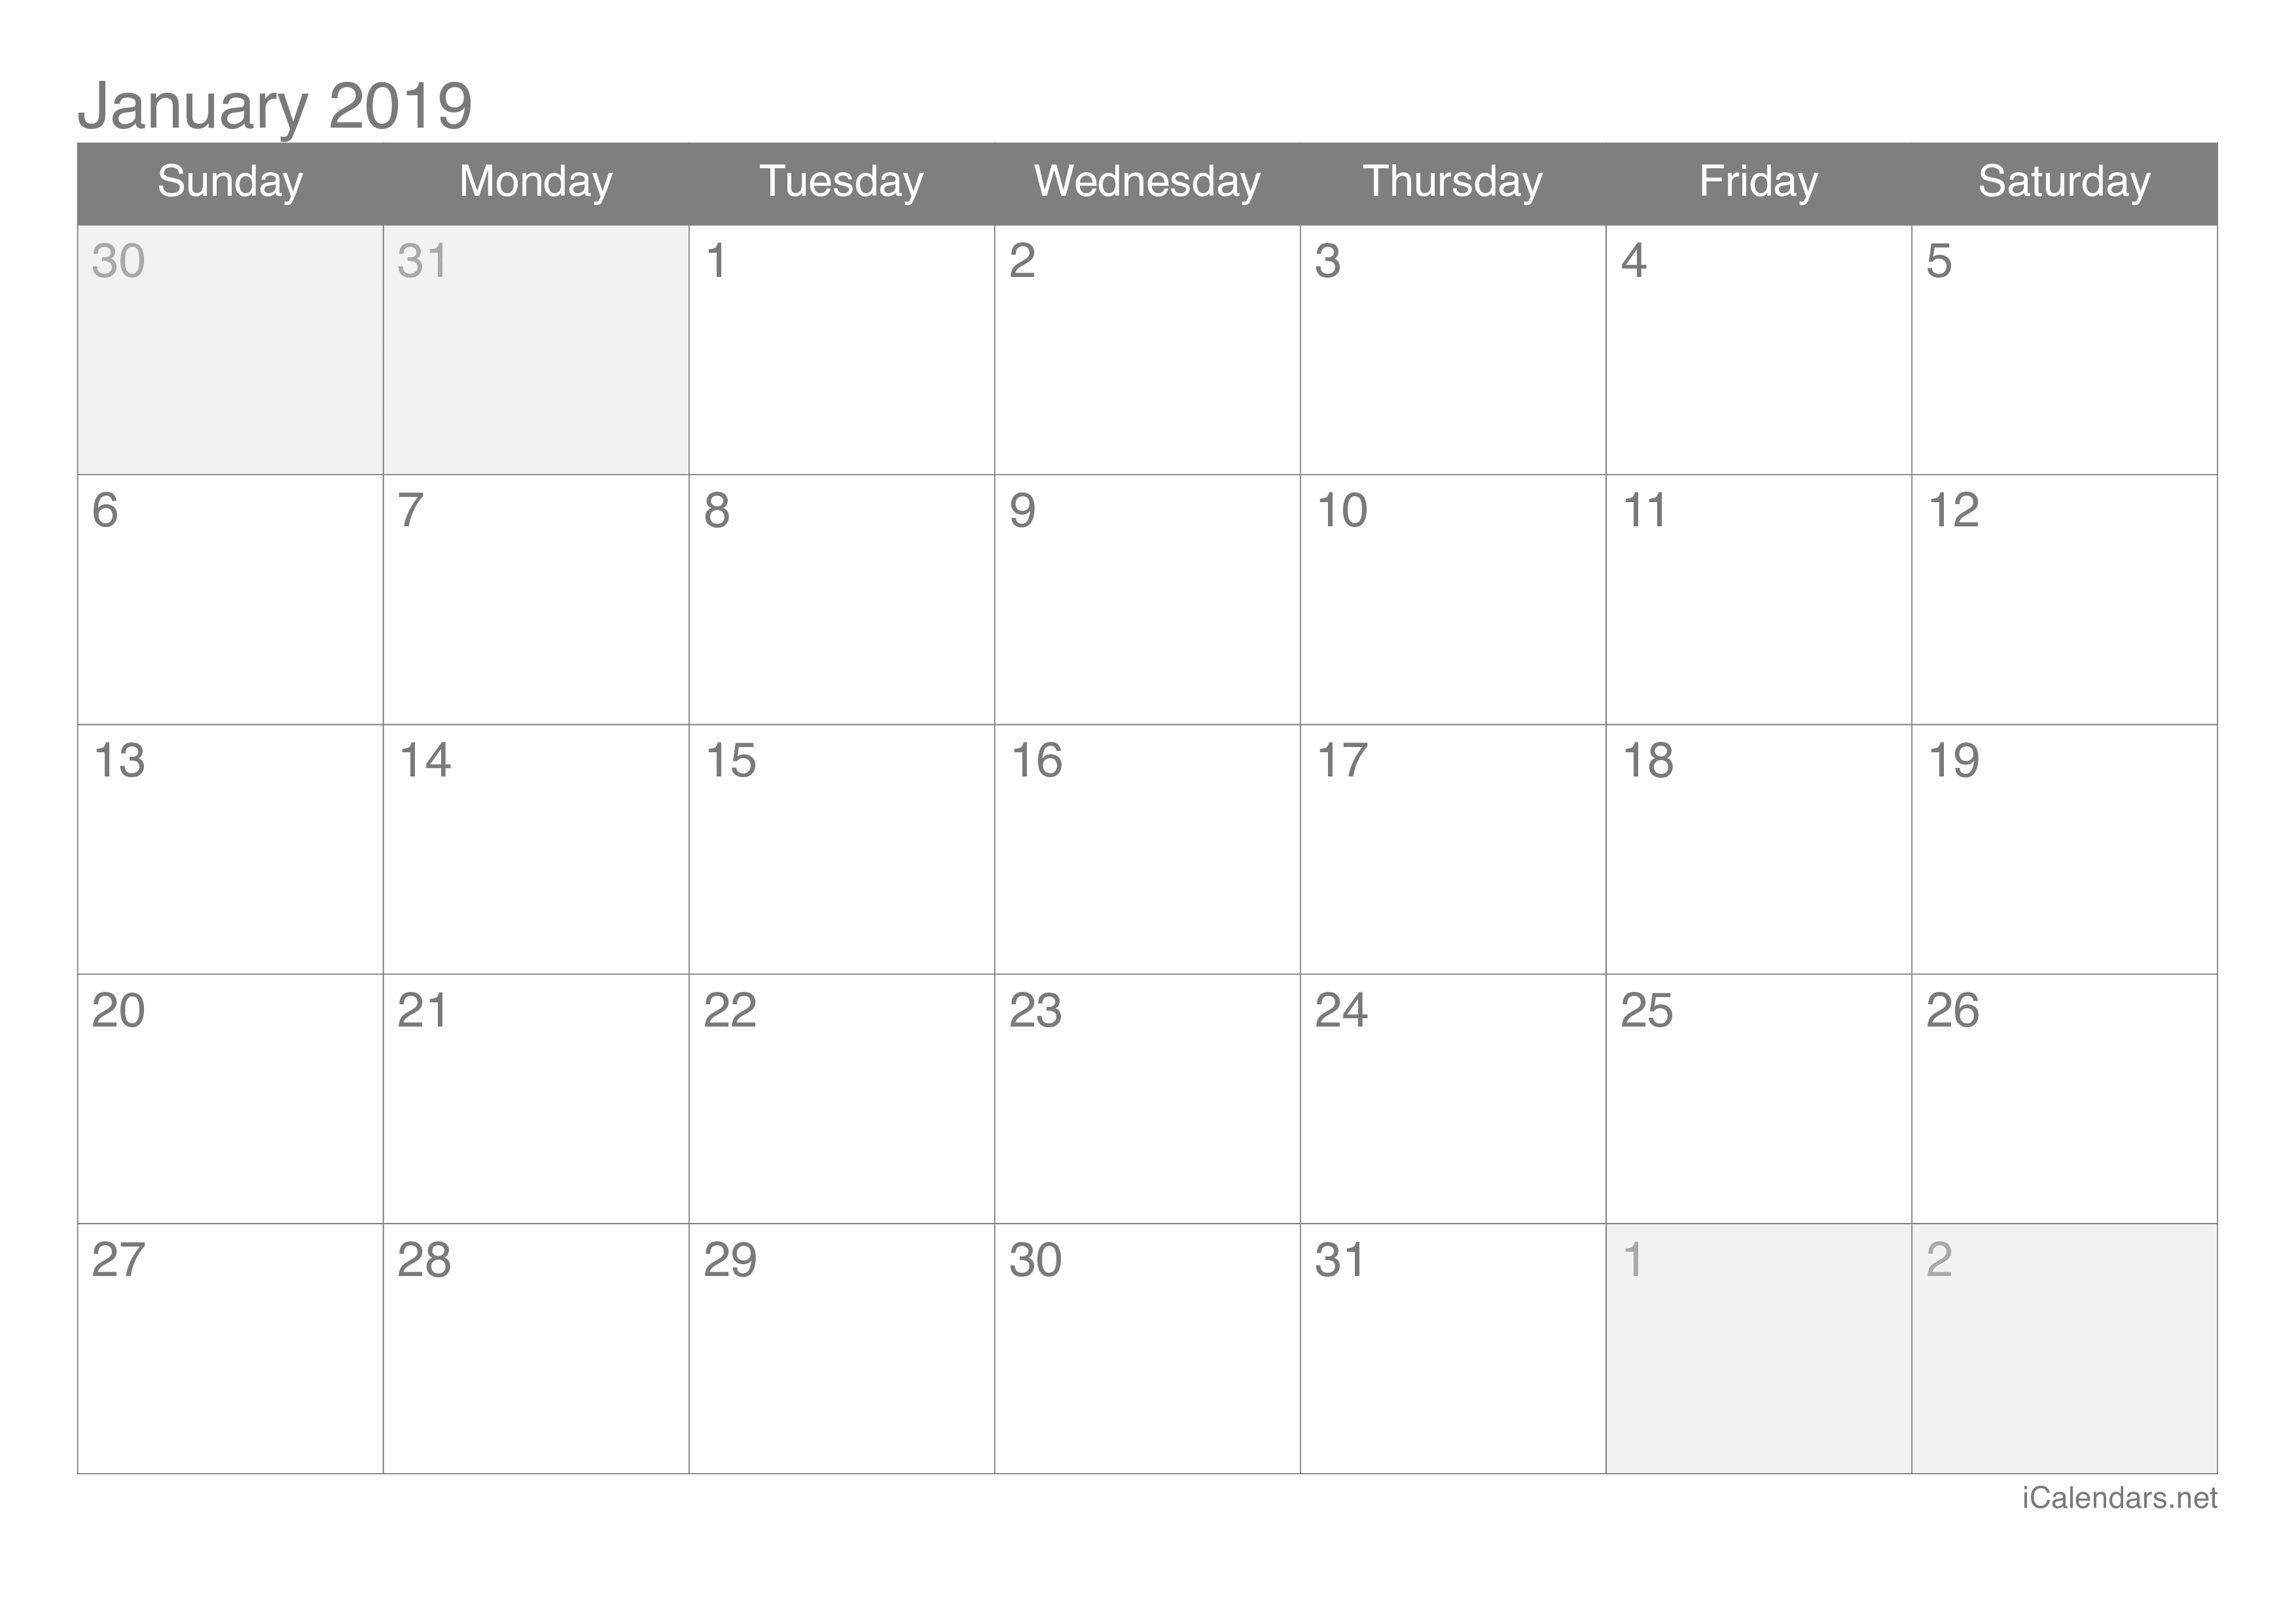 january-2019-printable-calendar-icalendars